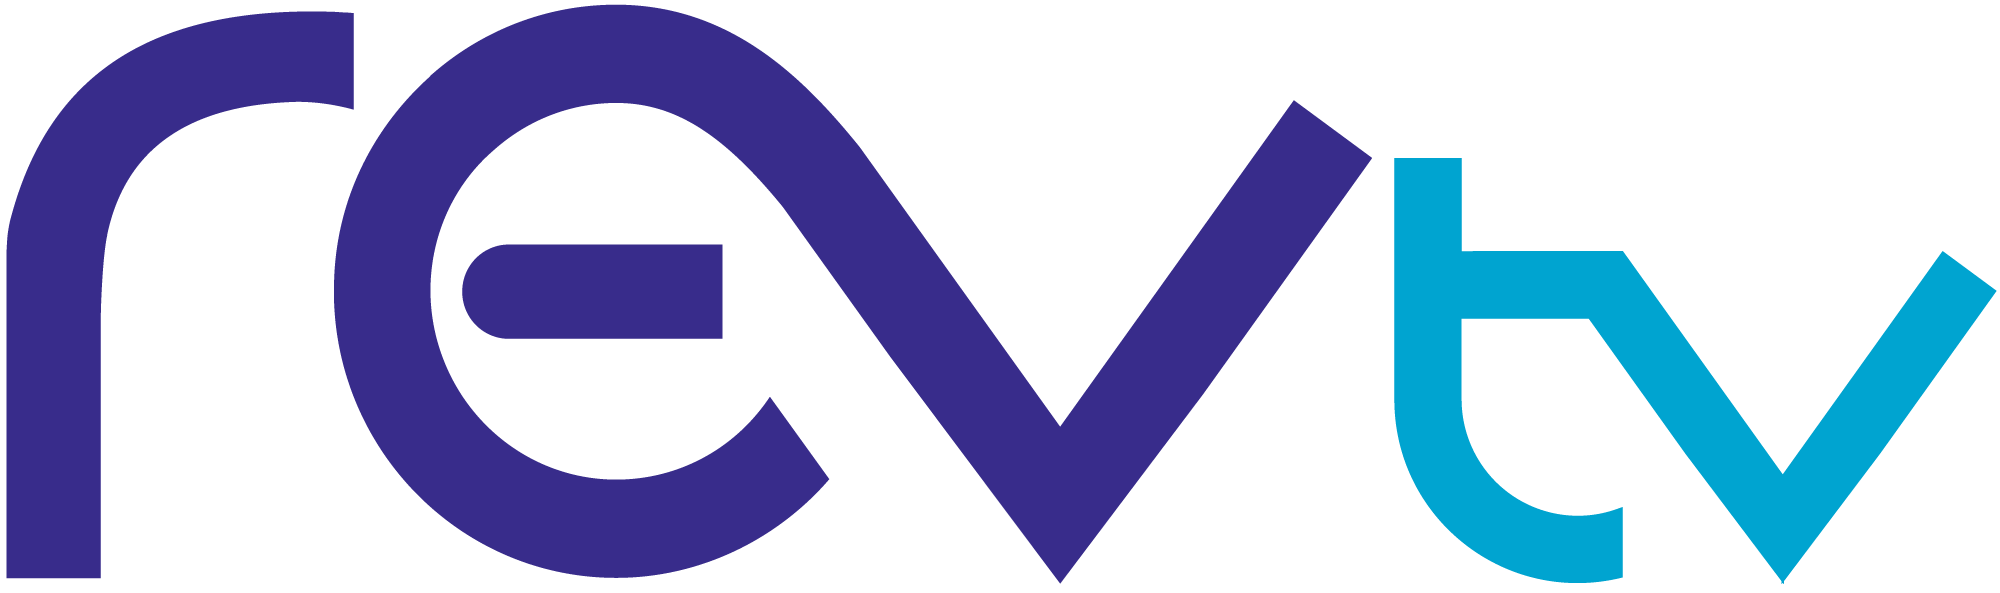 REV TV logo